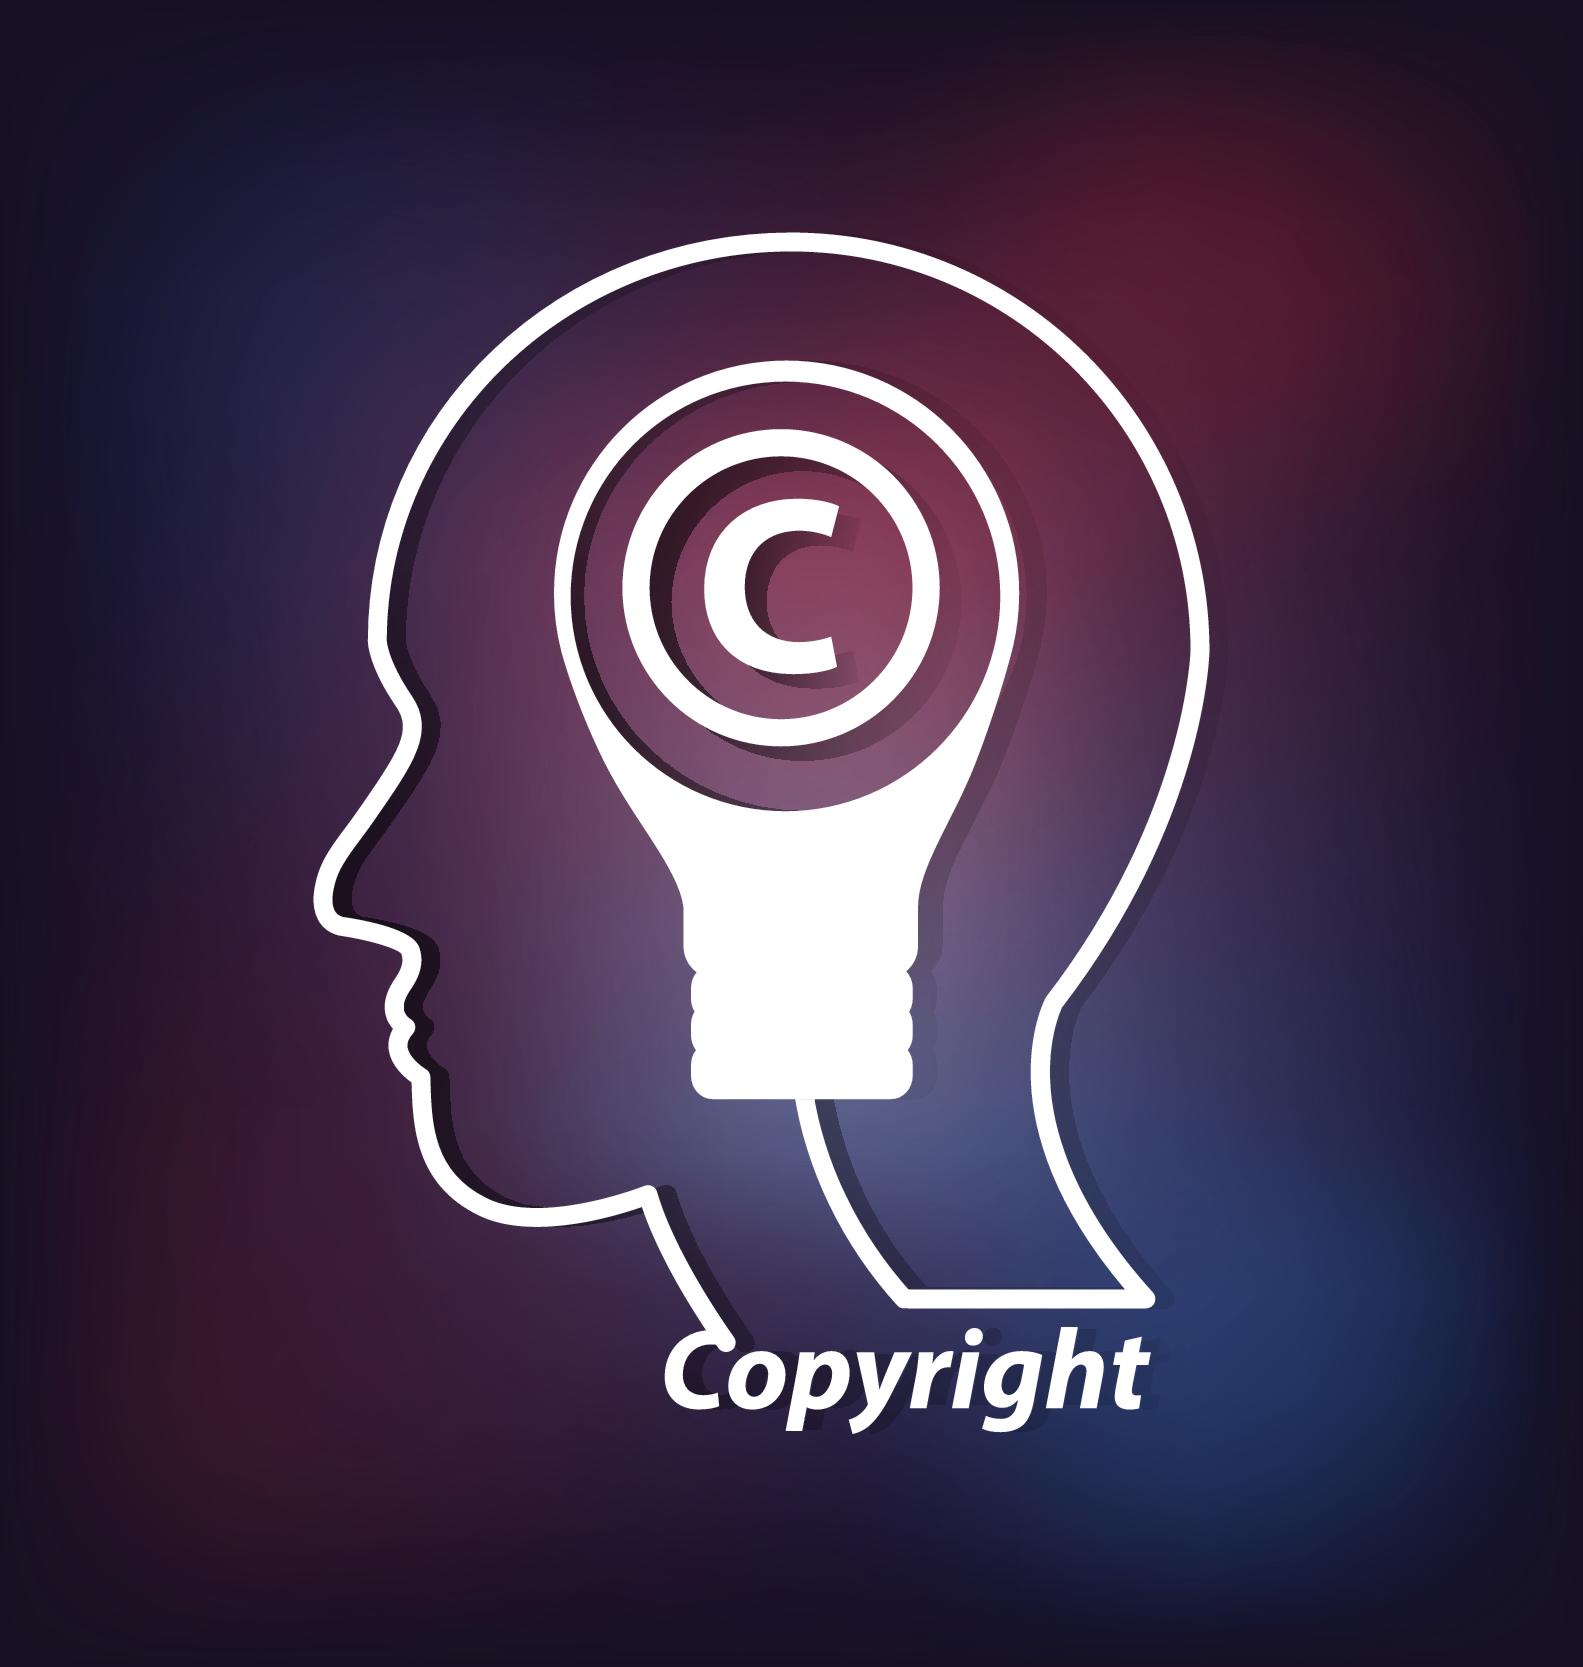 Creative copyright business vector design 05